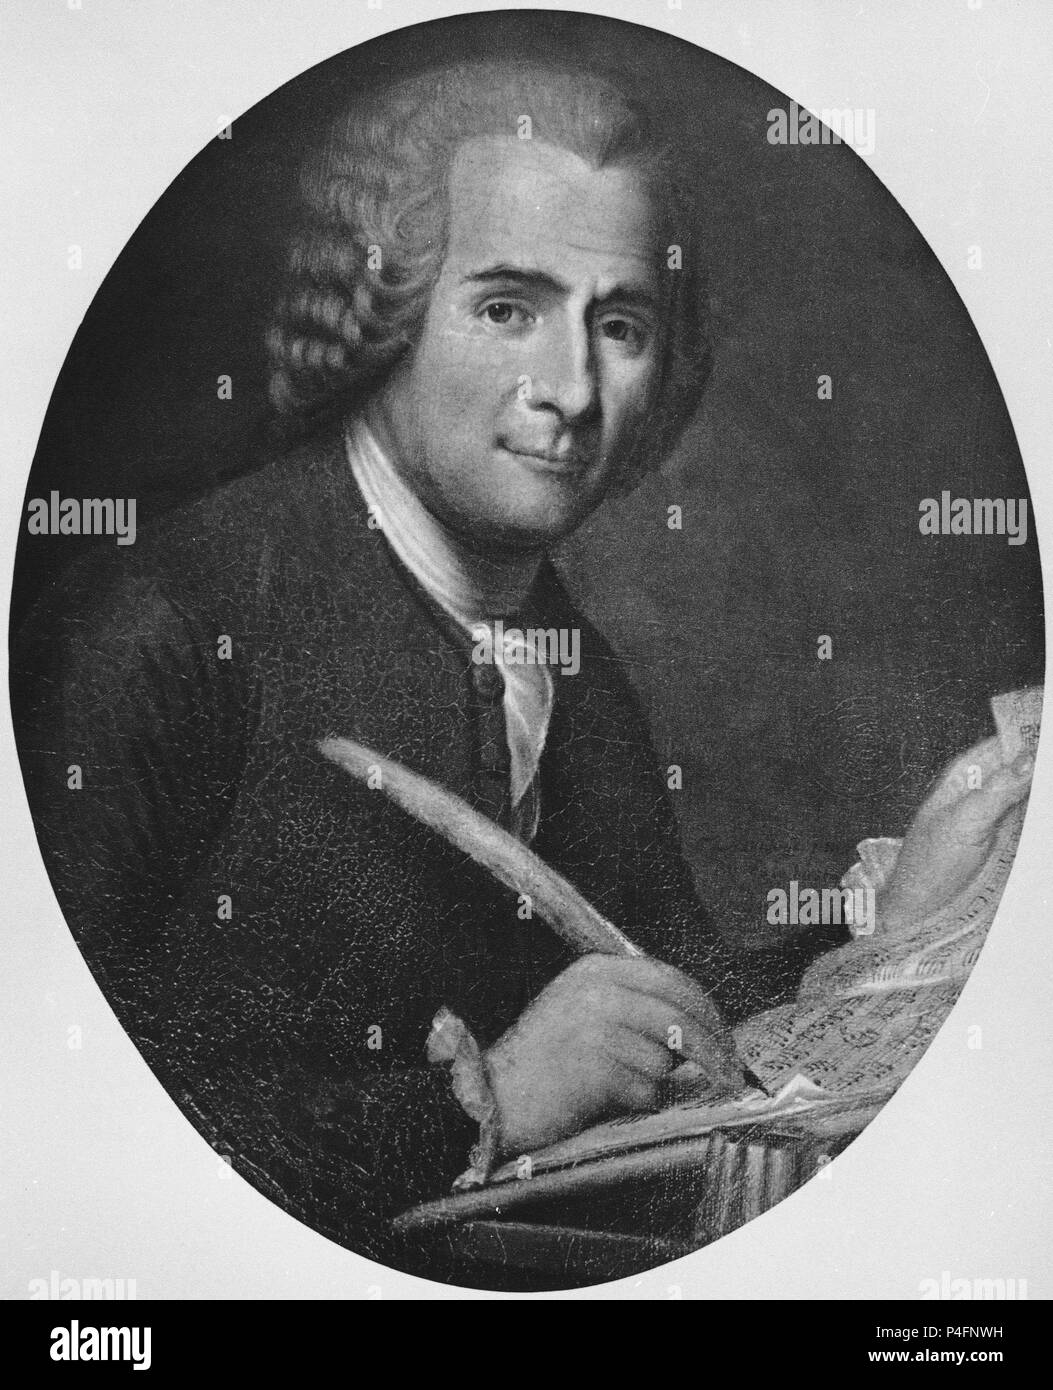 RETRATO DE JEAN - JACQUES ROUSSEAU (1712-1778) - FILOSOFO SUIZO. Ort: INSTITUTO DE COOPERACION IBEROAMERICANA, MADRID, SPANIEN. Stockfoto